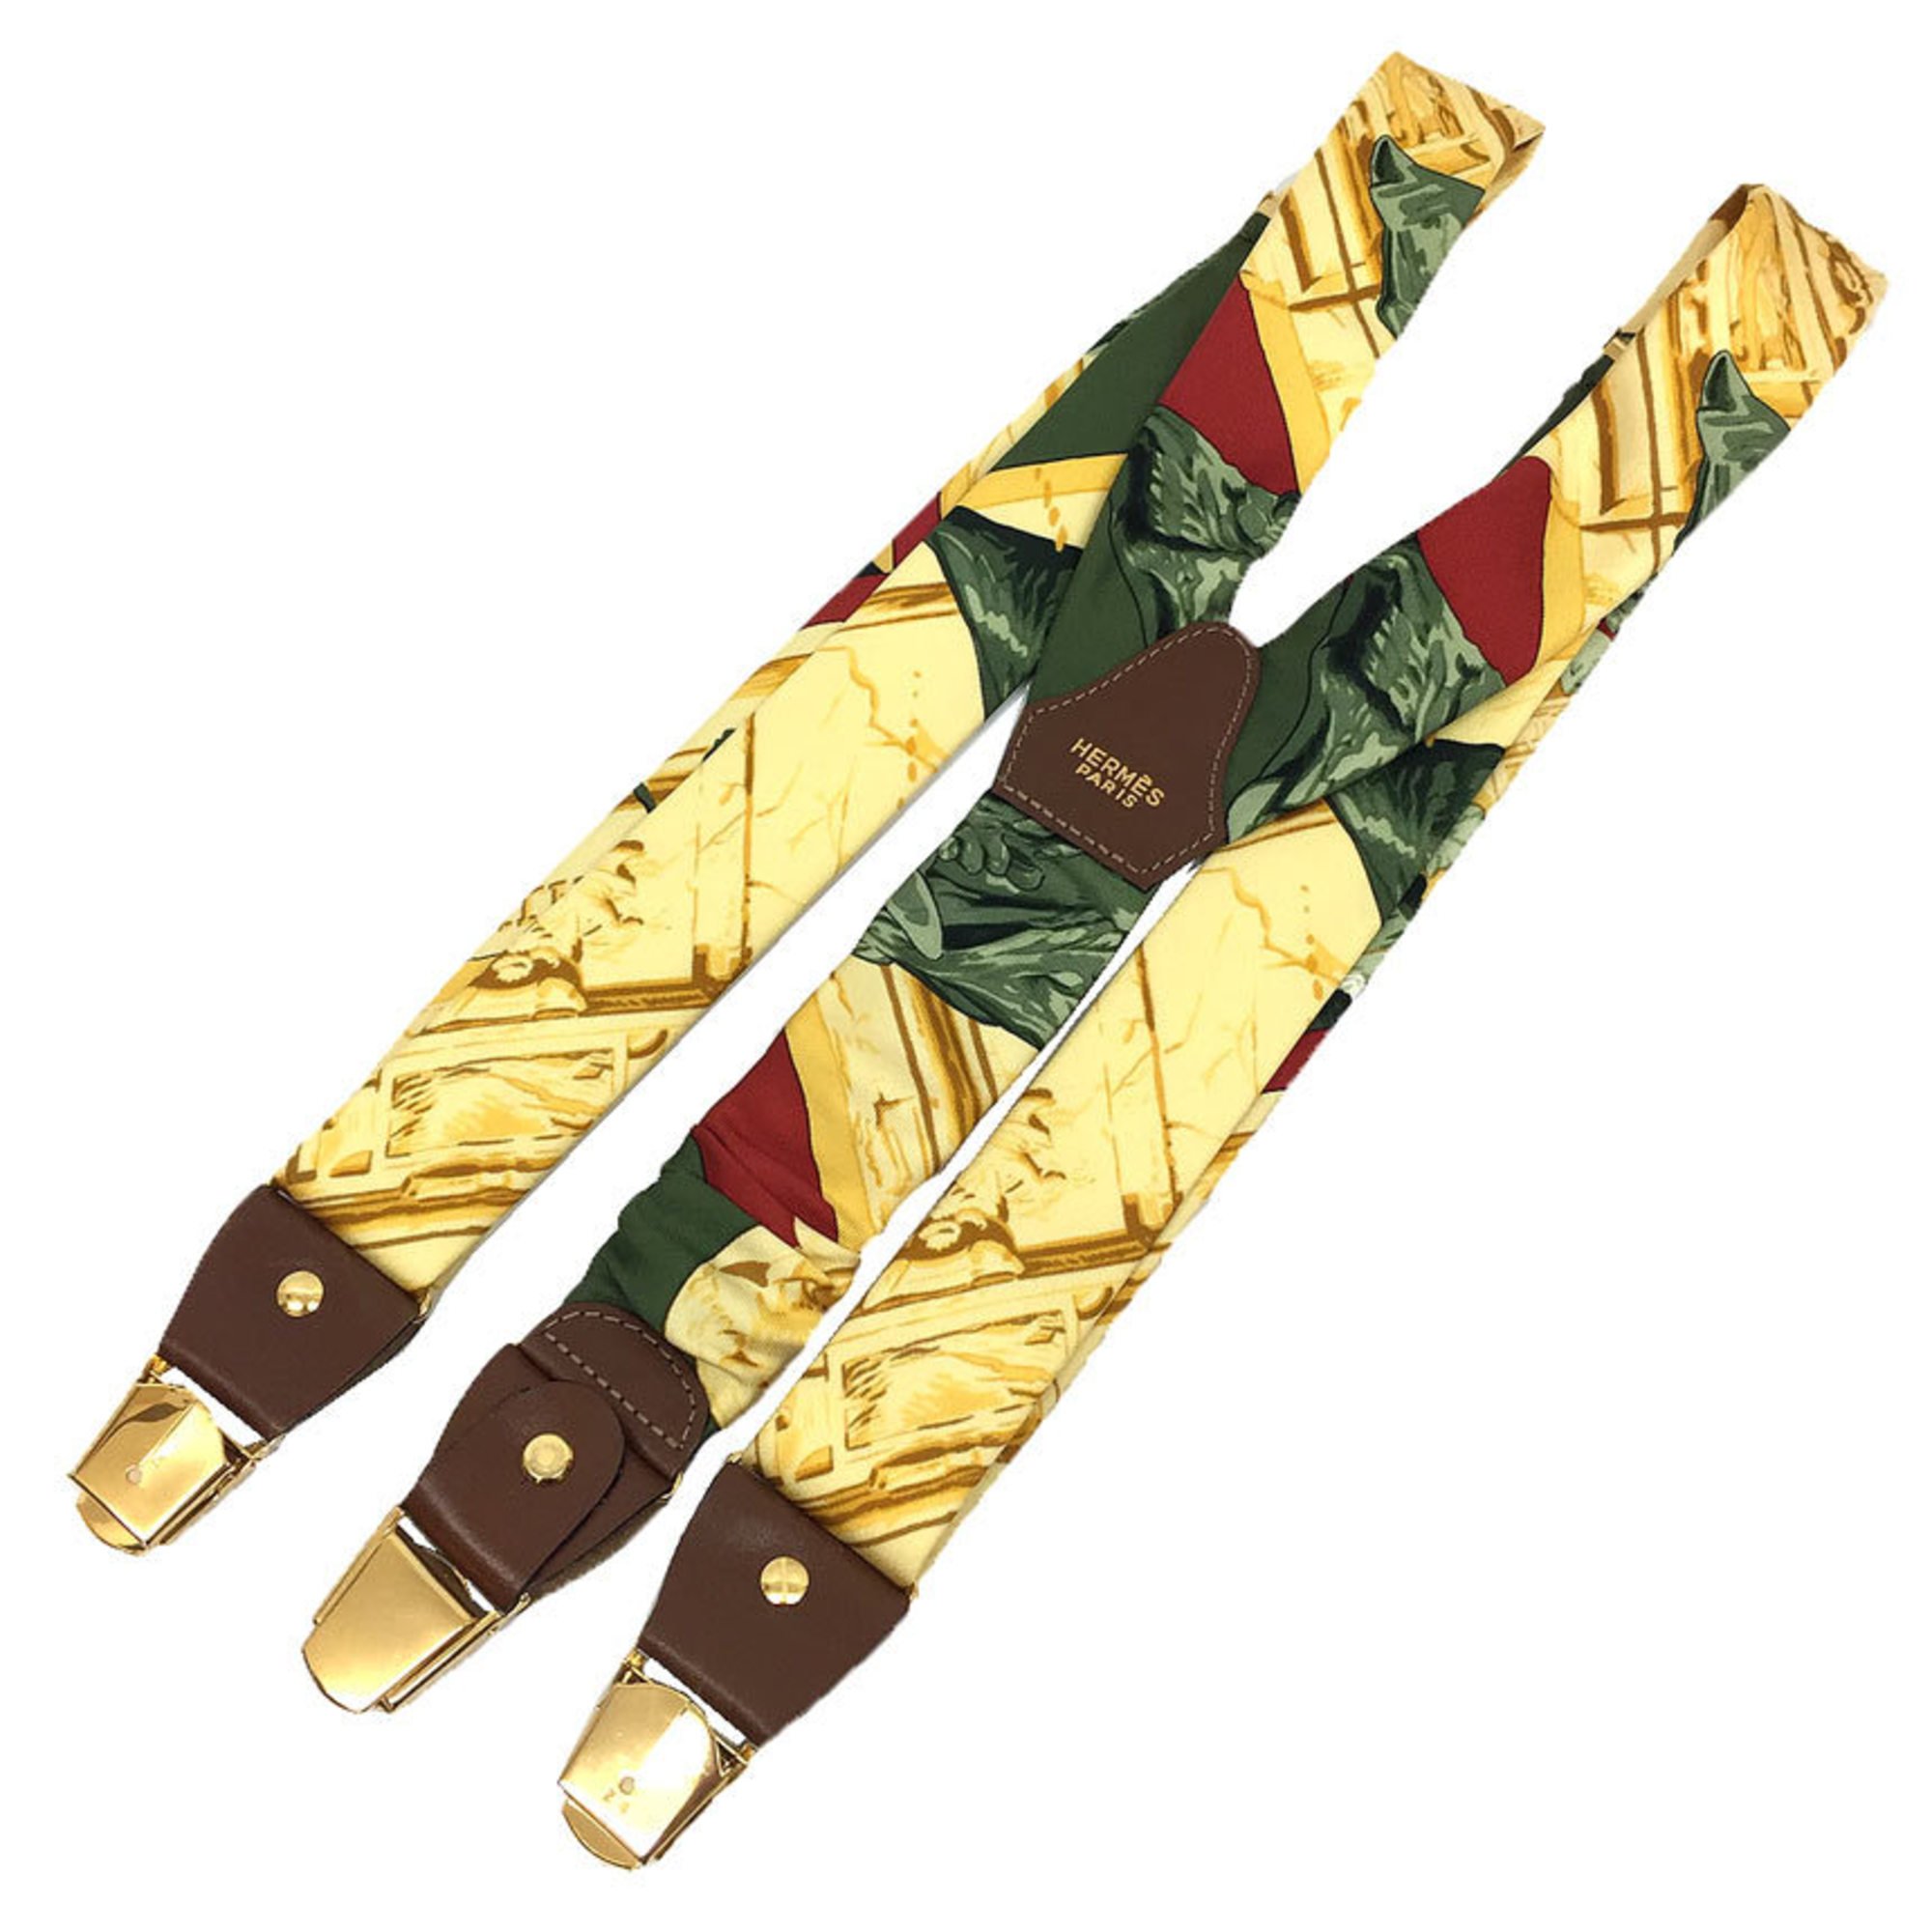 HERMES suspenders LA FONTAINE DE BARTHOLDI Bartholdi Fountain Silk x Leather Beige scarf muffler aq9775